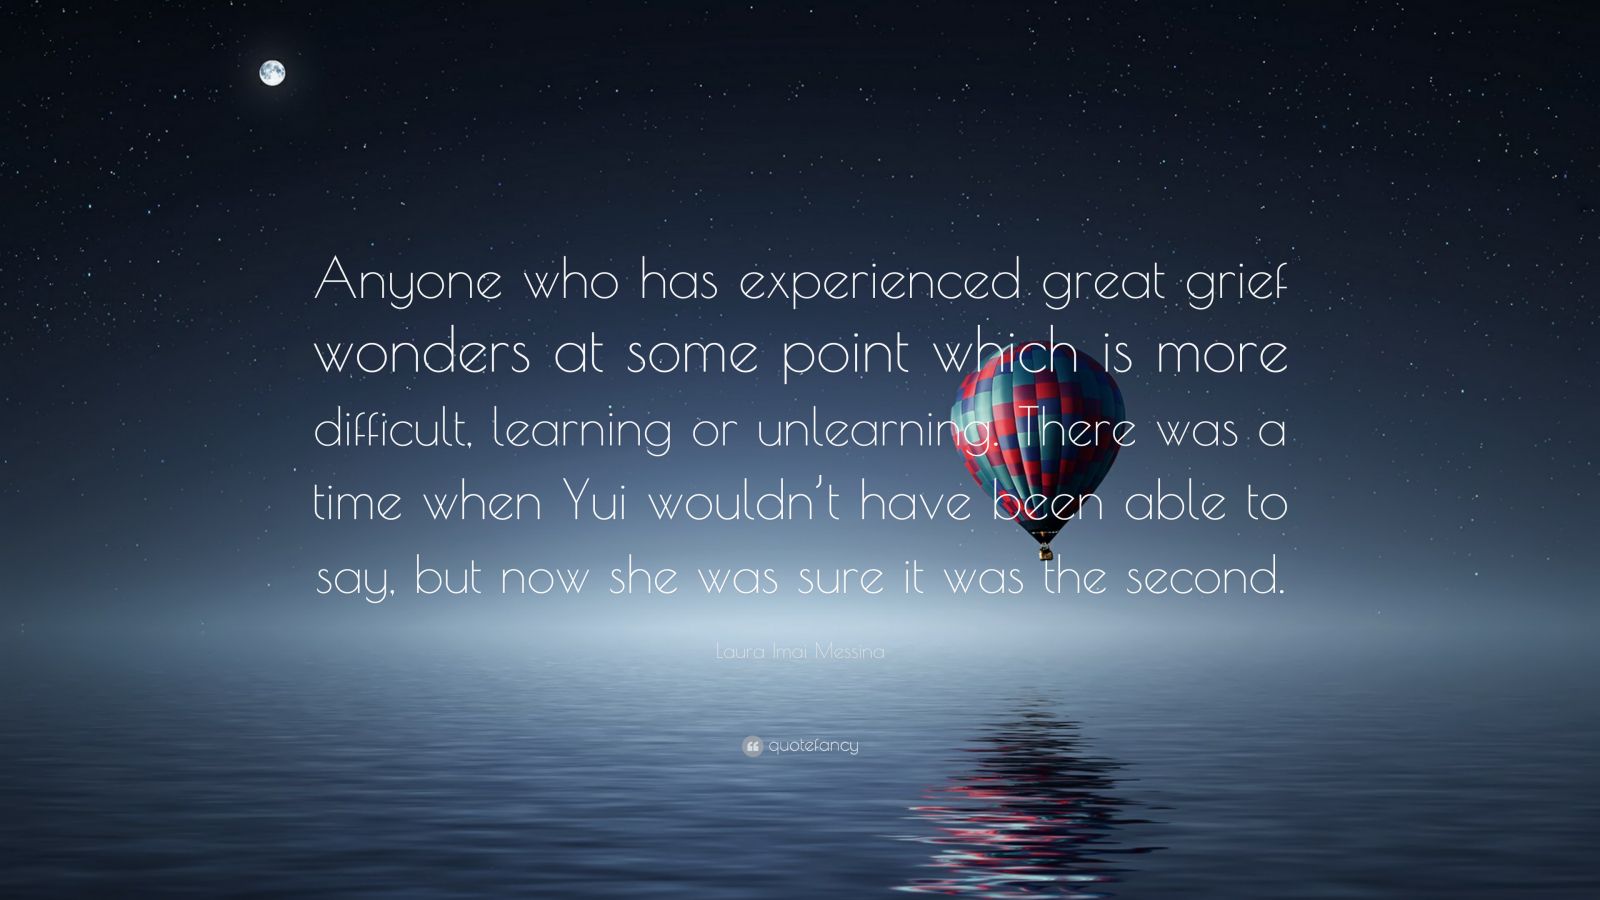 Laura Imai Messina Quote: “Anyone who has experienced great